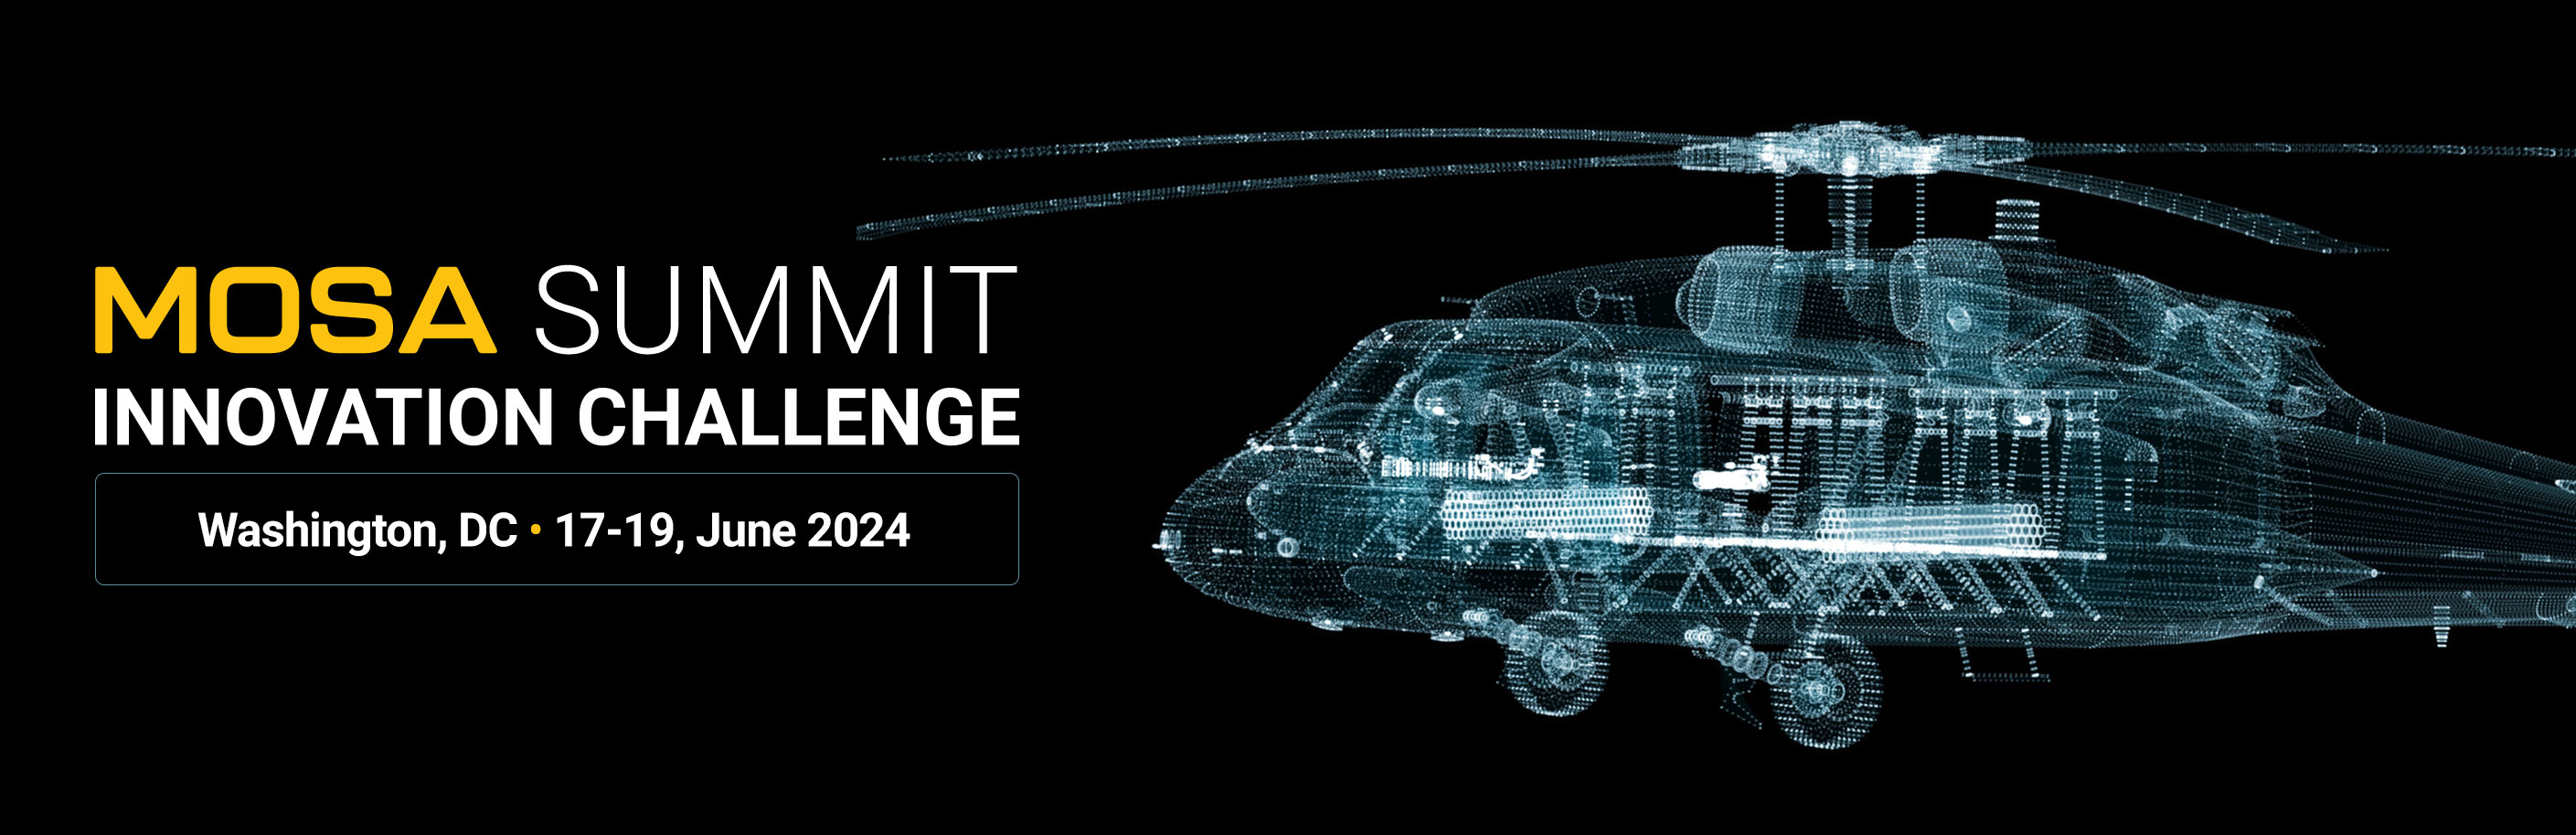 MOSA Summit Innovation Challenge, Sept. 18-19, 2023, Atlanta GA